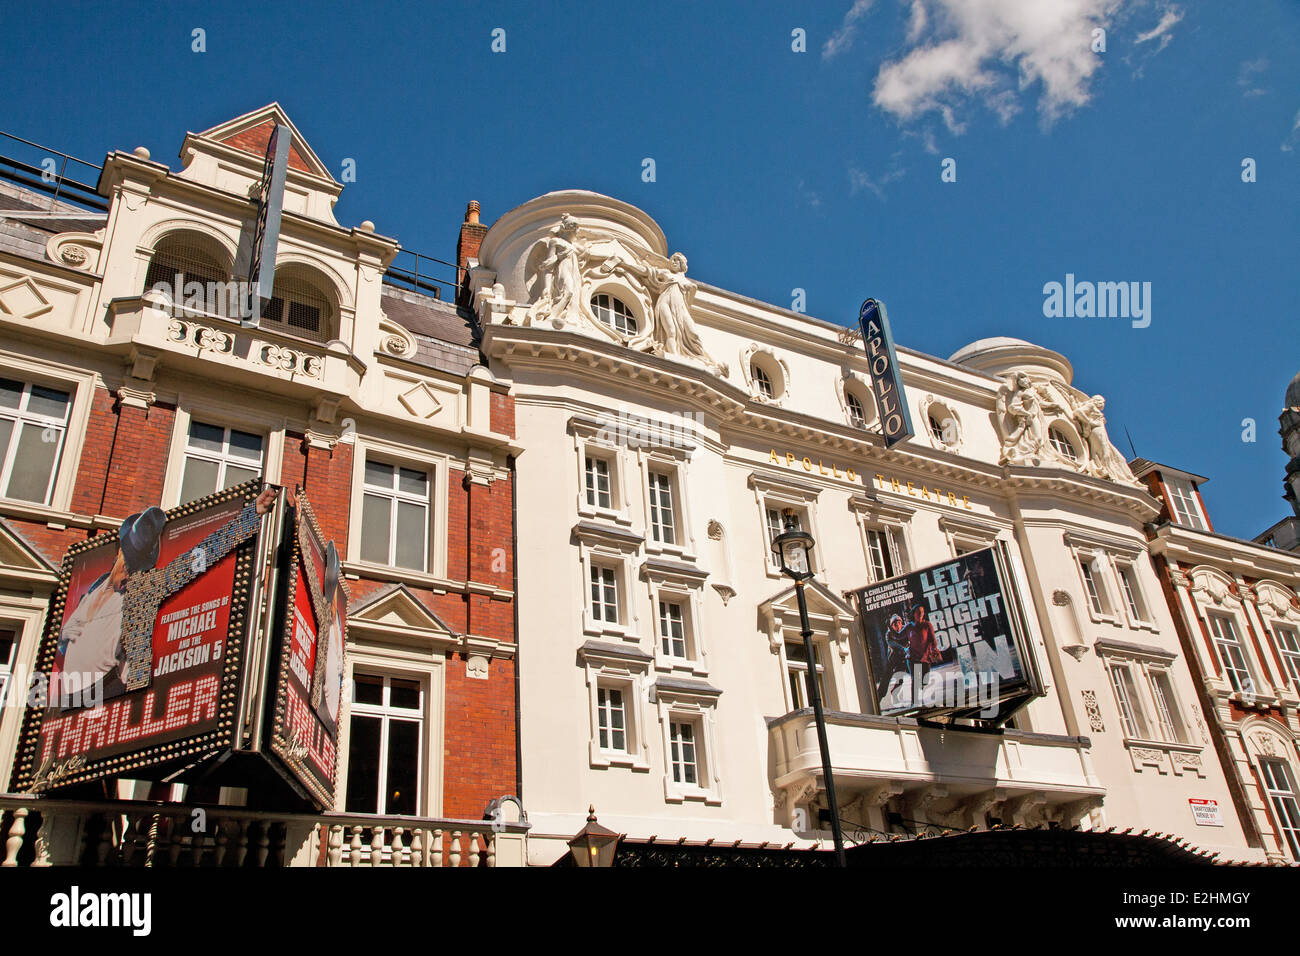 Theatreland, Shaftesbury Ave, London, England Stock Photo